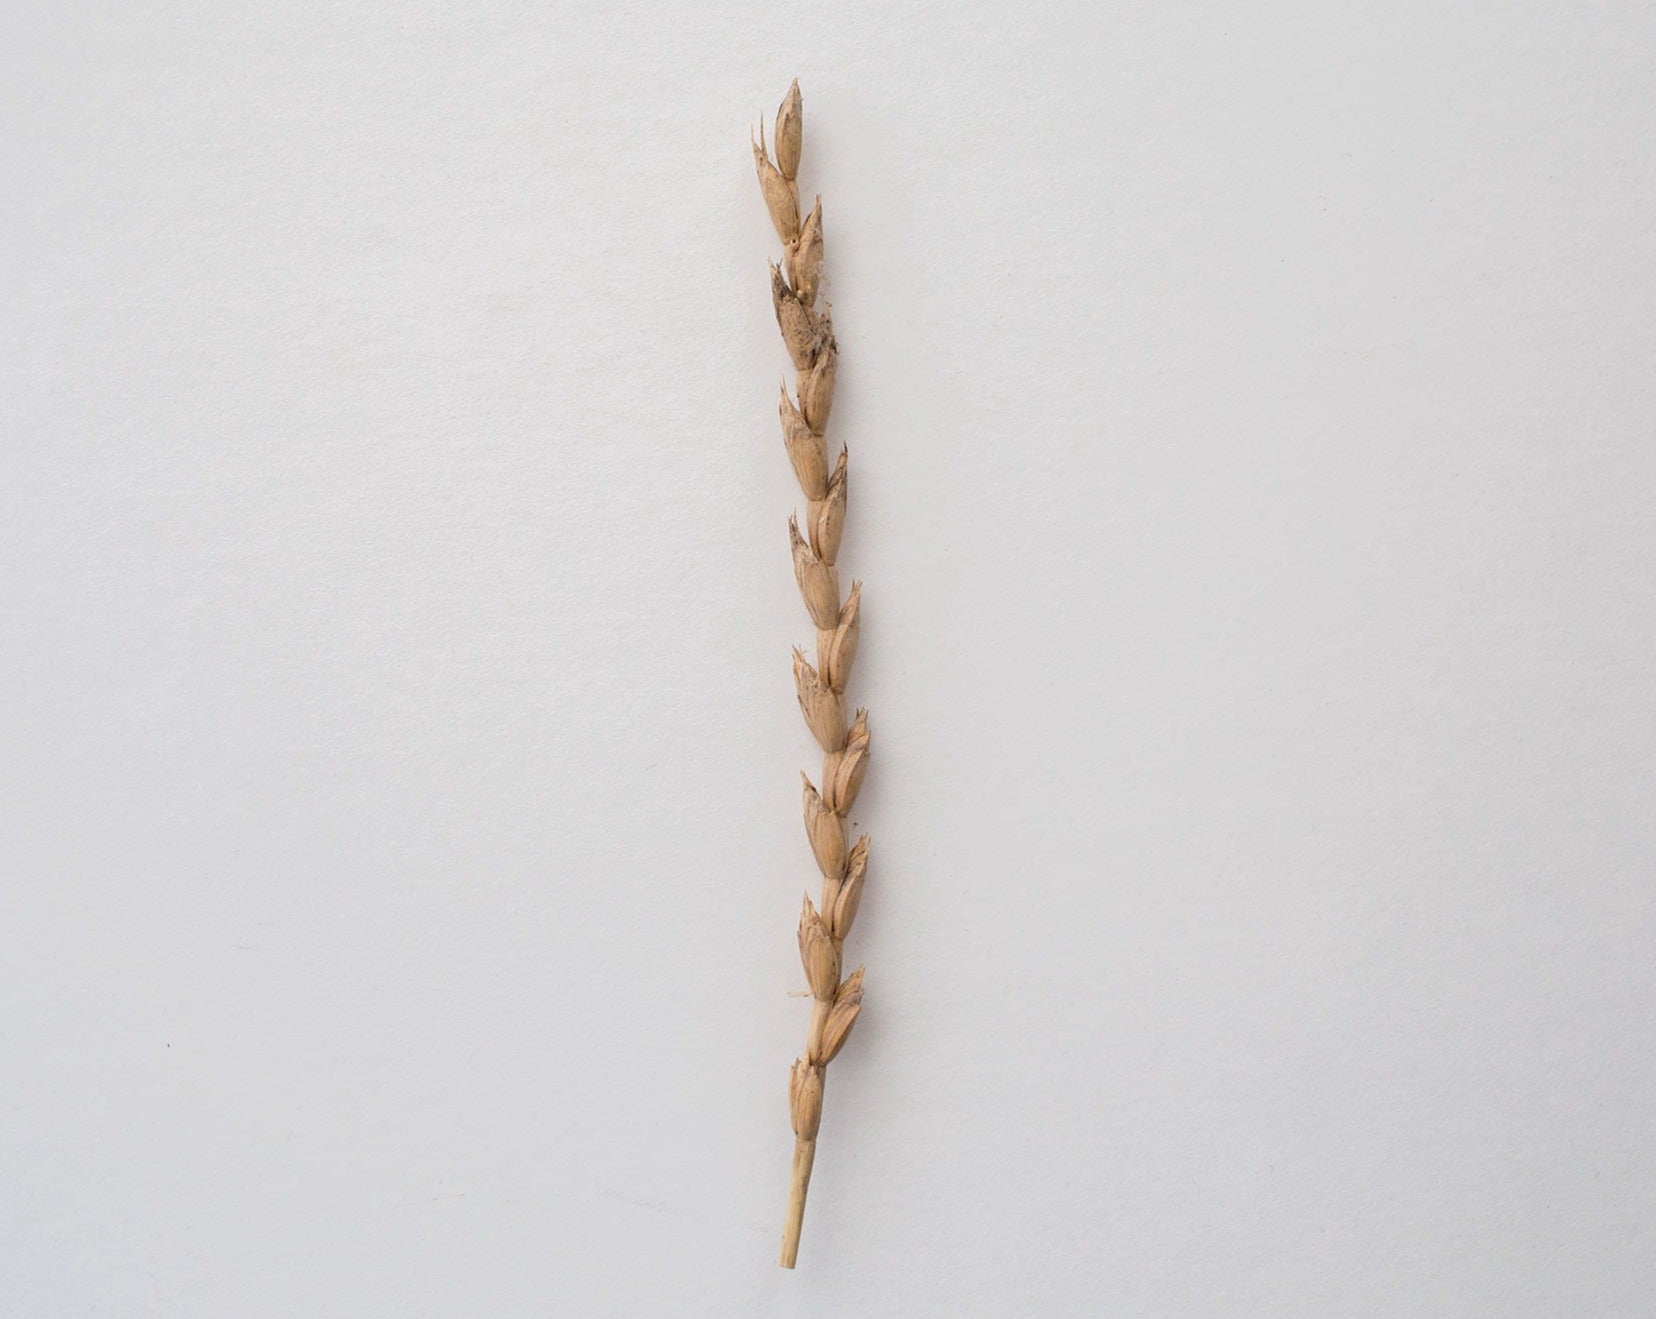 Wheat (Spelt) - Fall